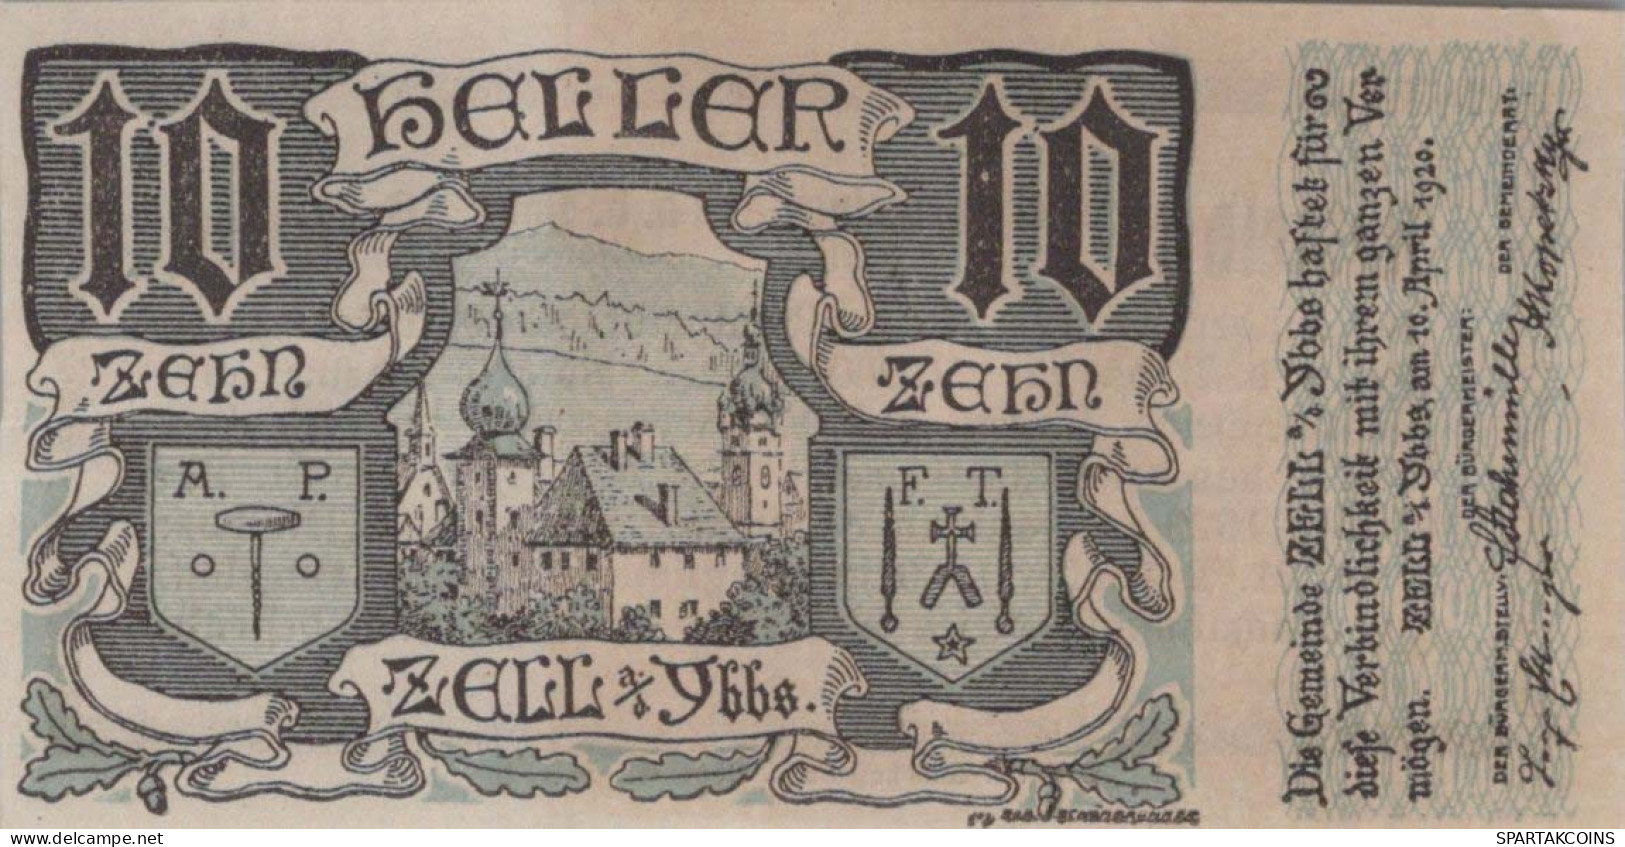 10 HELLER 1920 Stadt ZELL AN DER YBBS Niedrigeren Österreich Notgeld #PE108 - Lokale Ausgaben